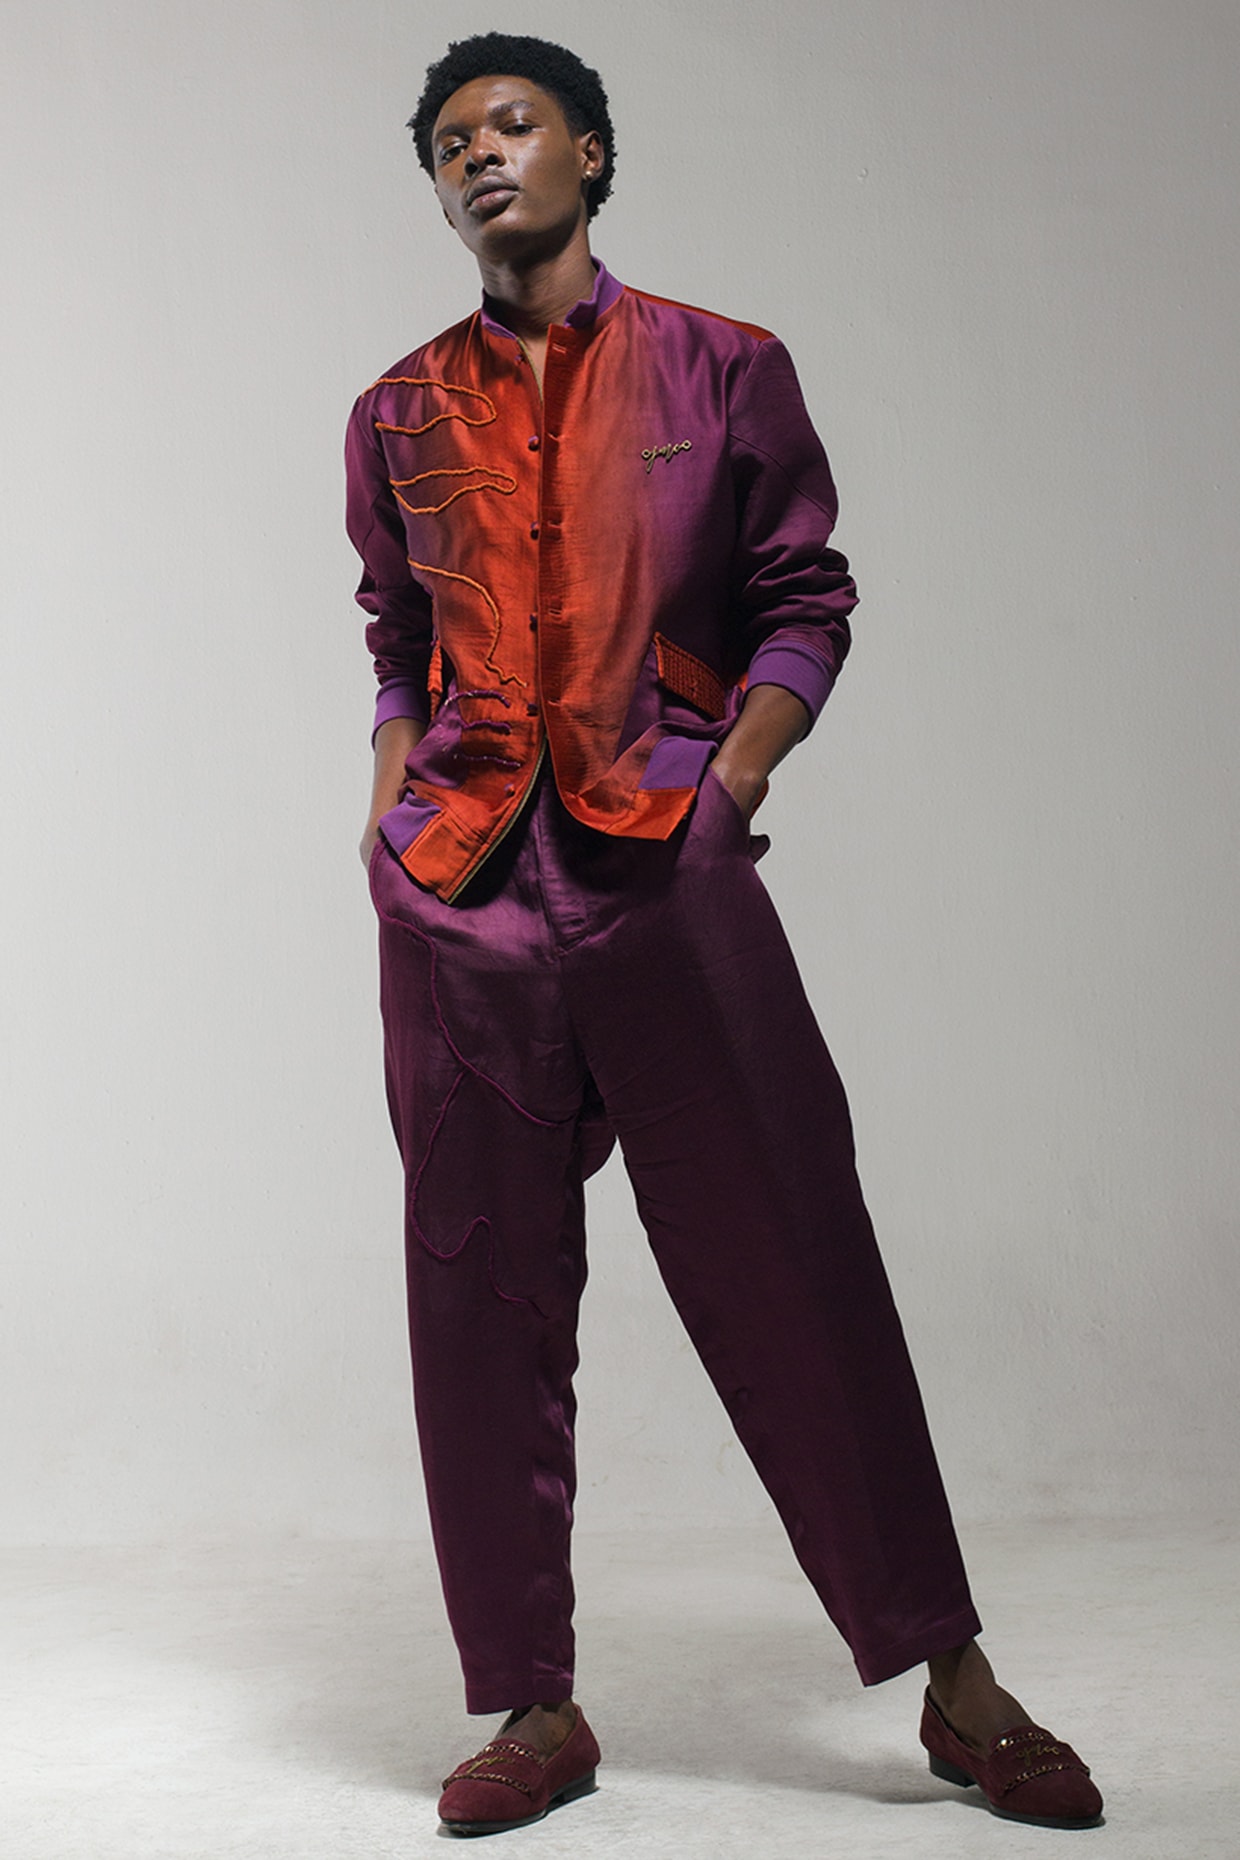 Amazon.com: Women's Pajamas Pajama Women Suit Trousers Sets Silk Nightwear  Sexy Nightgown Short and Sexy G String (Purple, XXXXXL) : Clothing, Shoes &  Jewelry